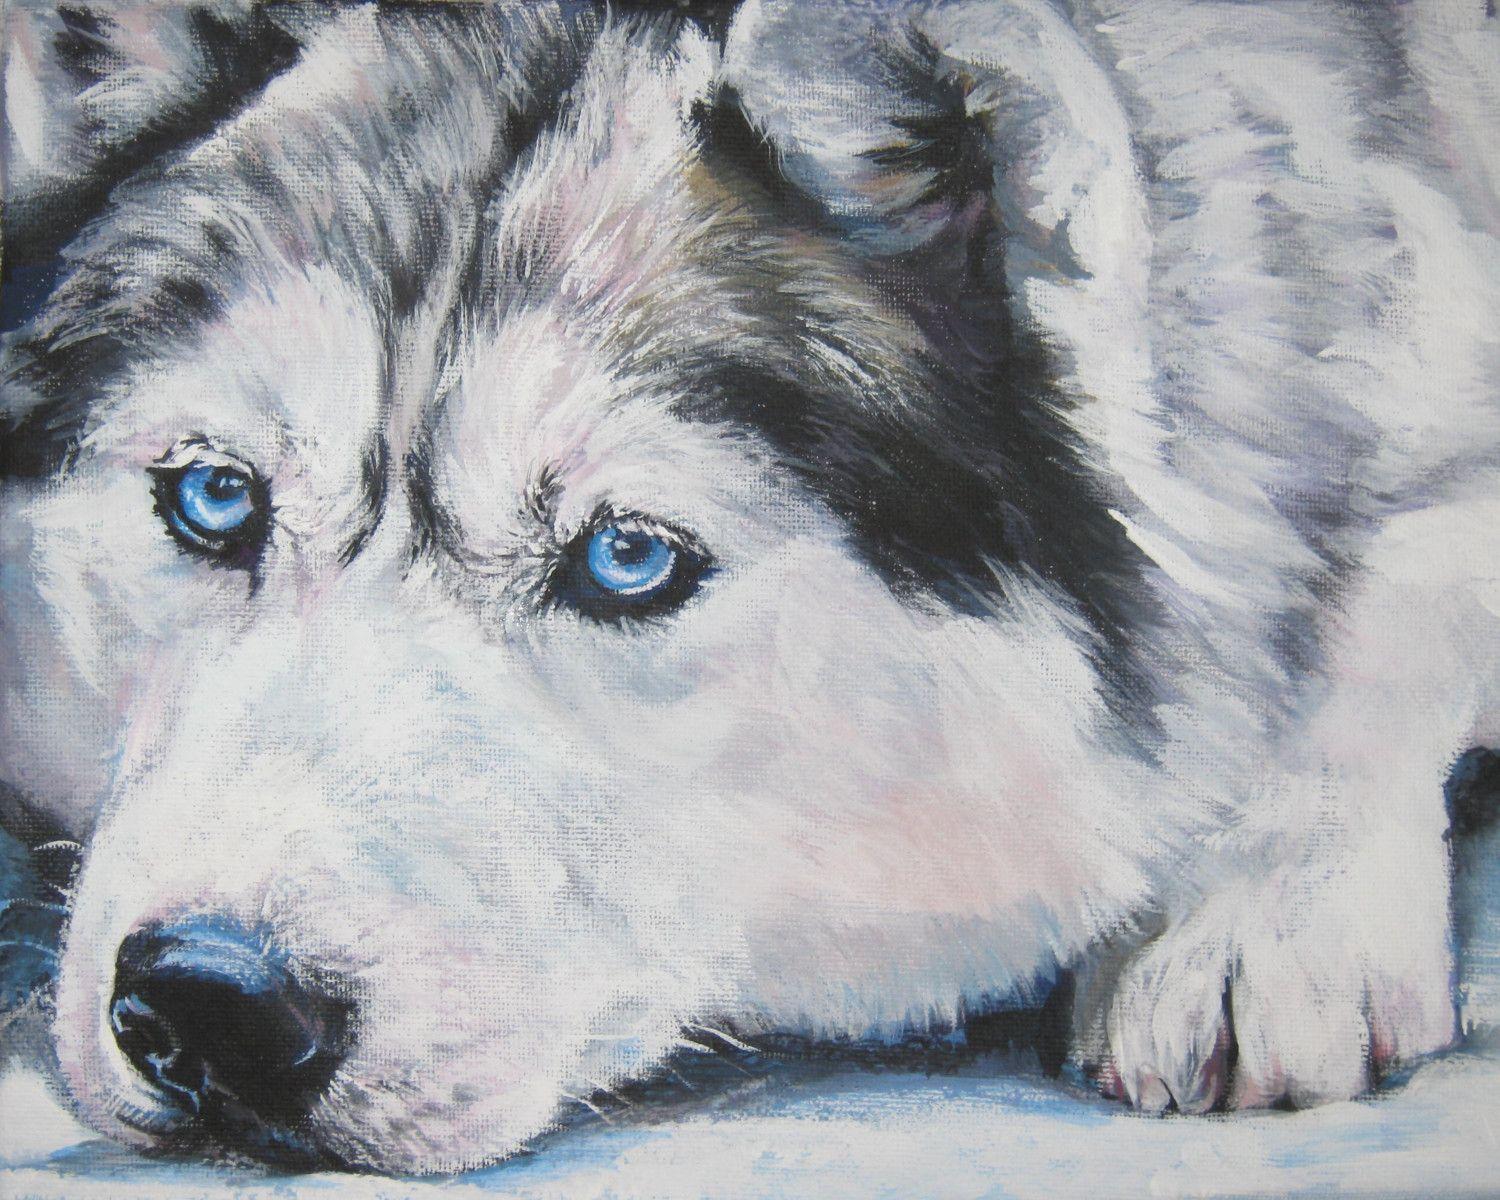 Drawn Siberian Husky dog photo and wallpaper. Beautiful Drawn